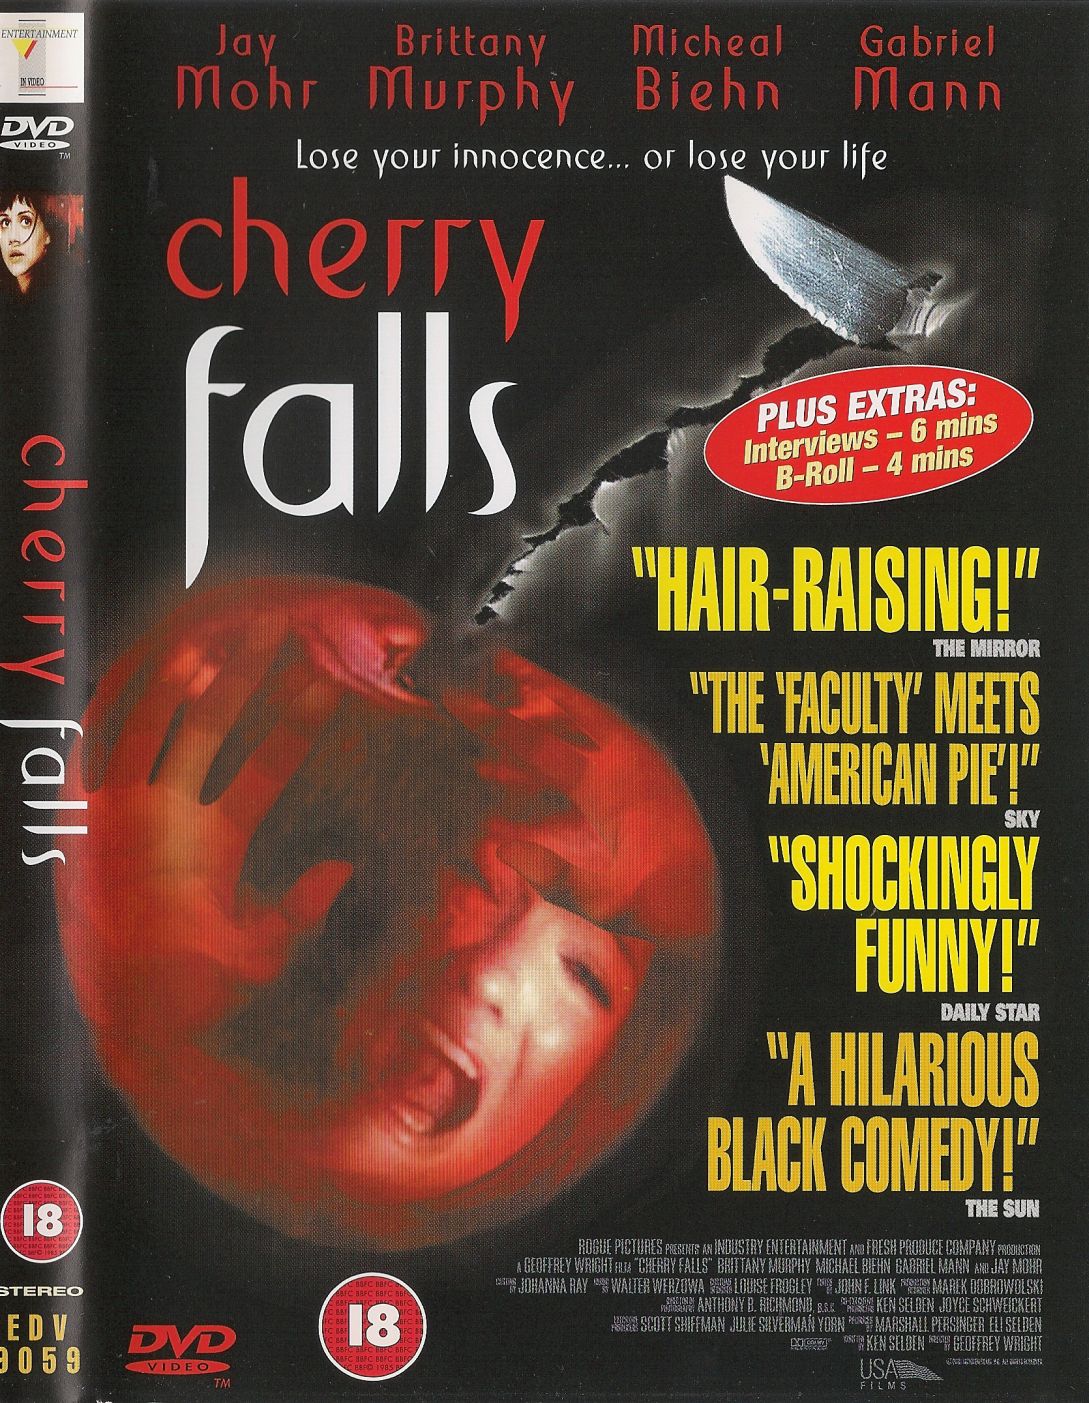 Cherry Falls - Region 2 - DVD Cover - FRONT
Keywords: media_cover